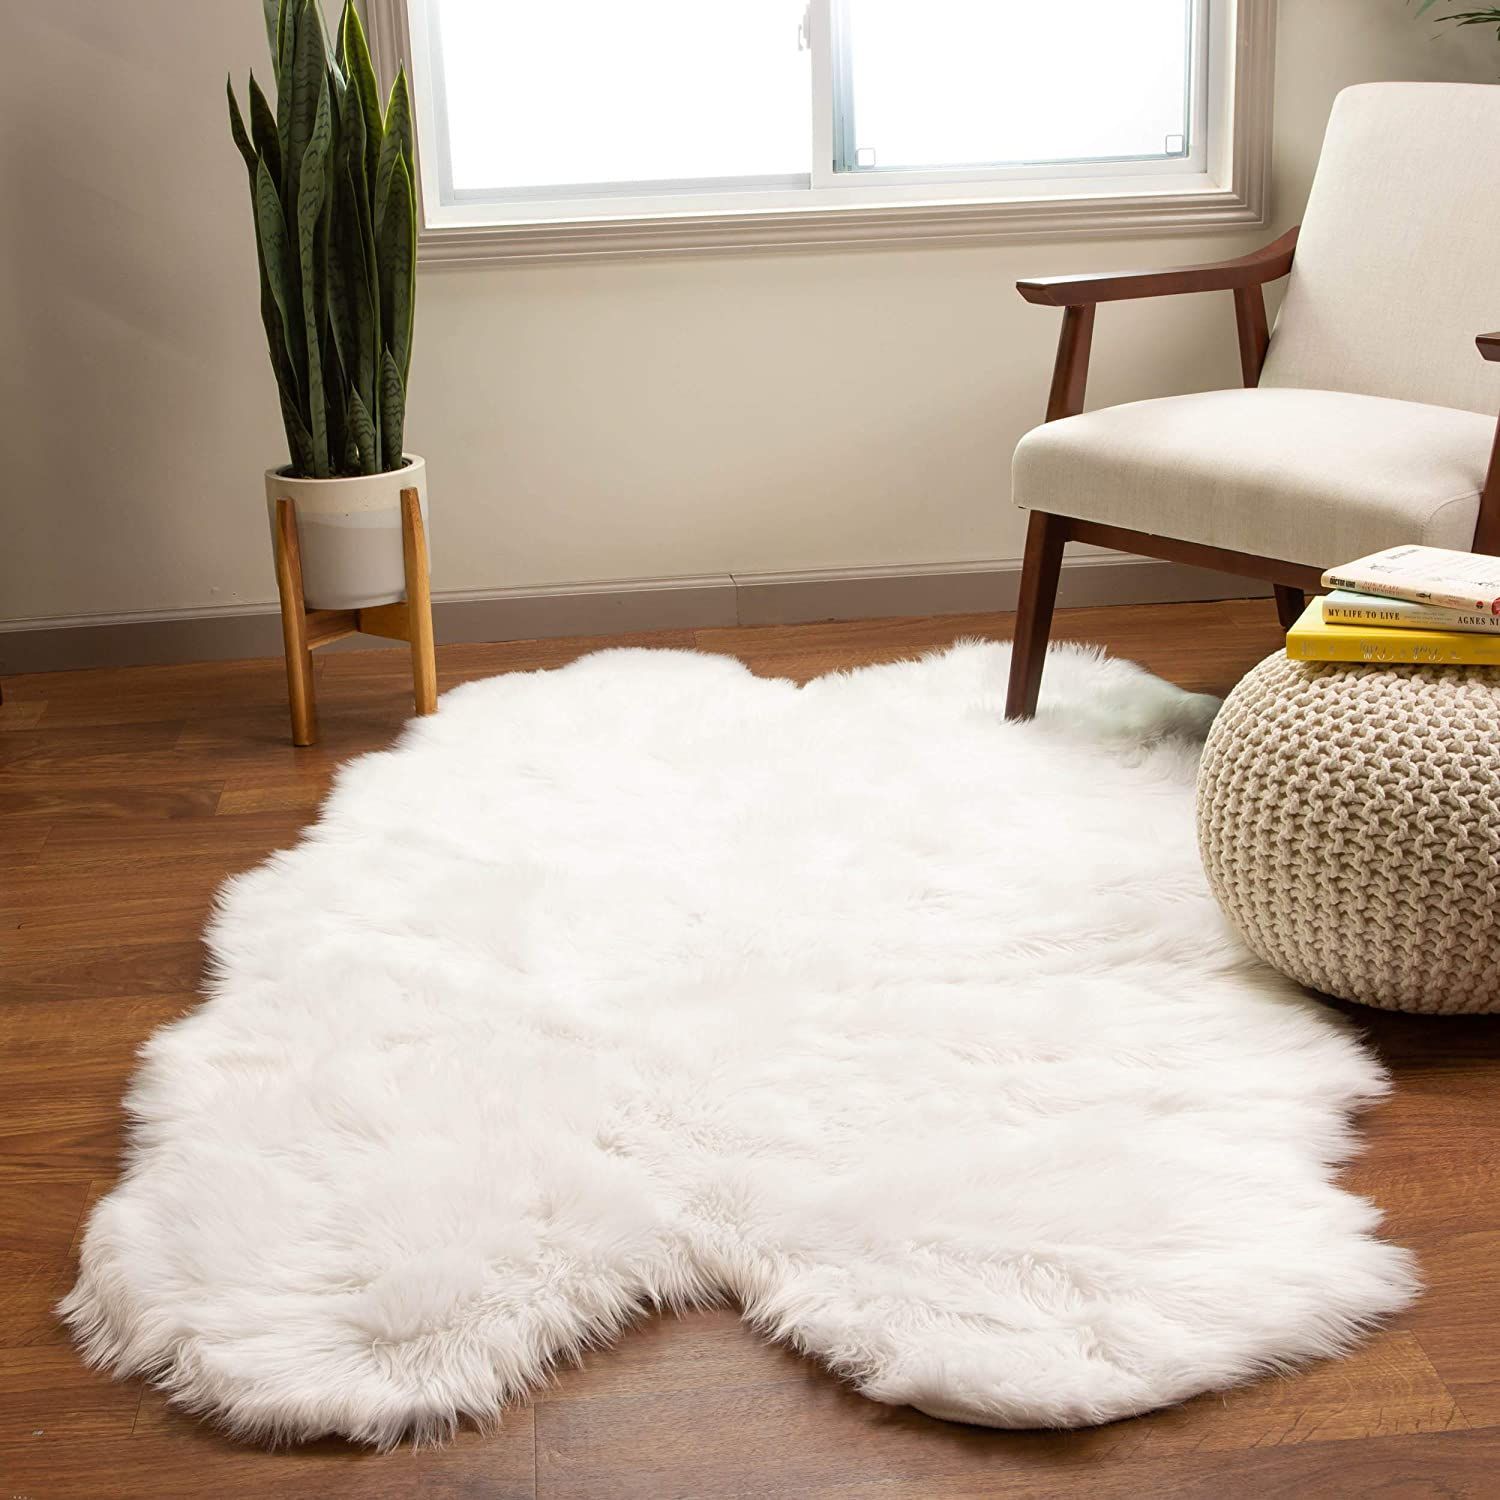 Home Office Plain Fluffy Bedrooms Faux Fur Soft Single Mat Sheepskin Hairy Rug,